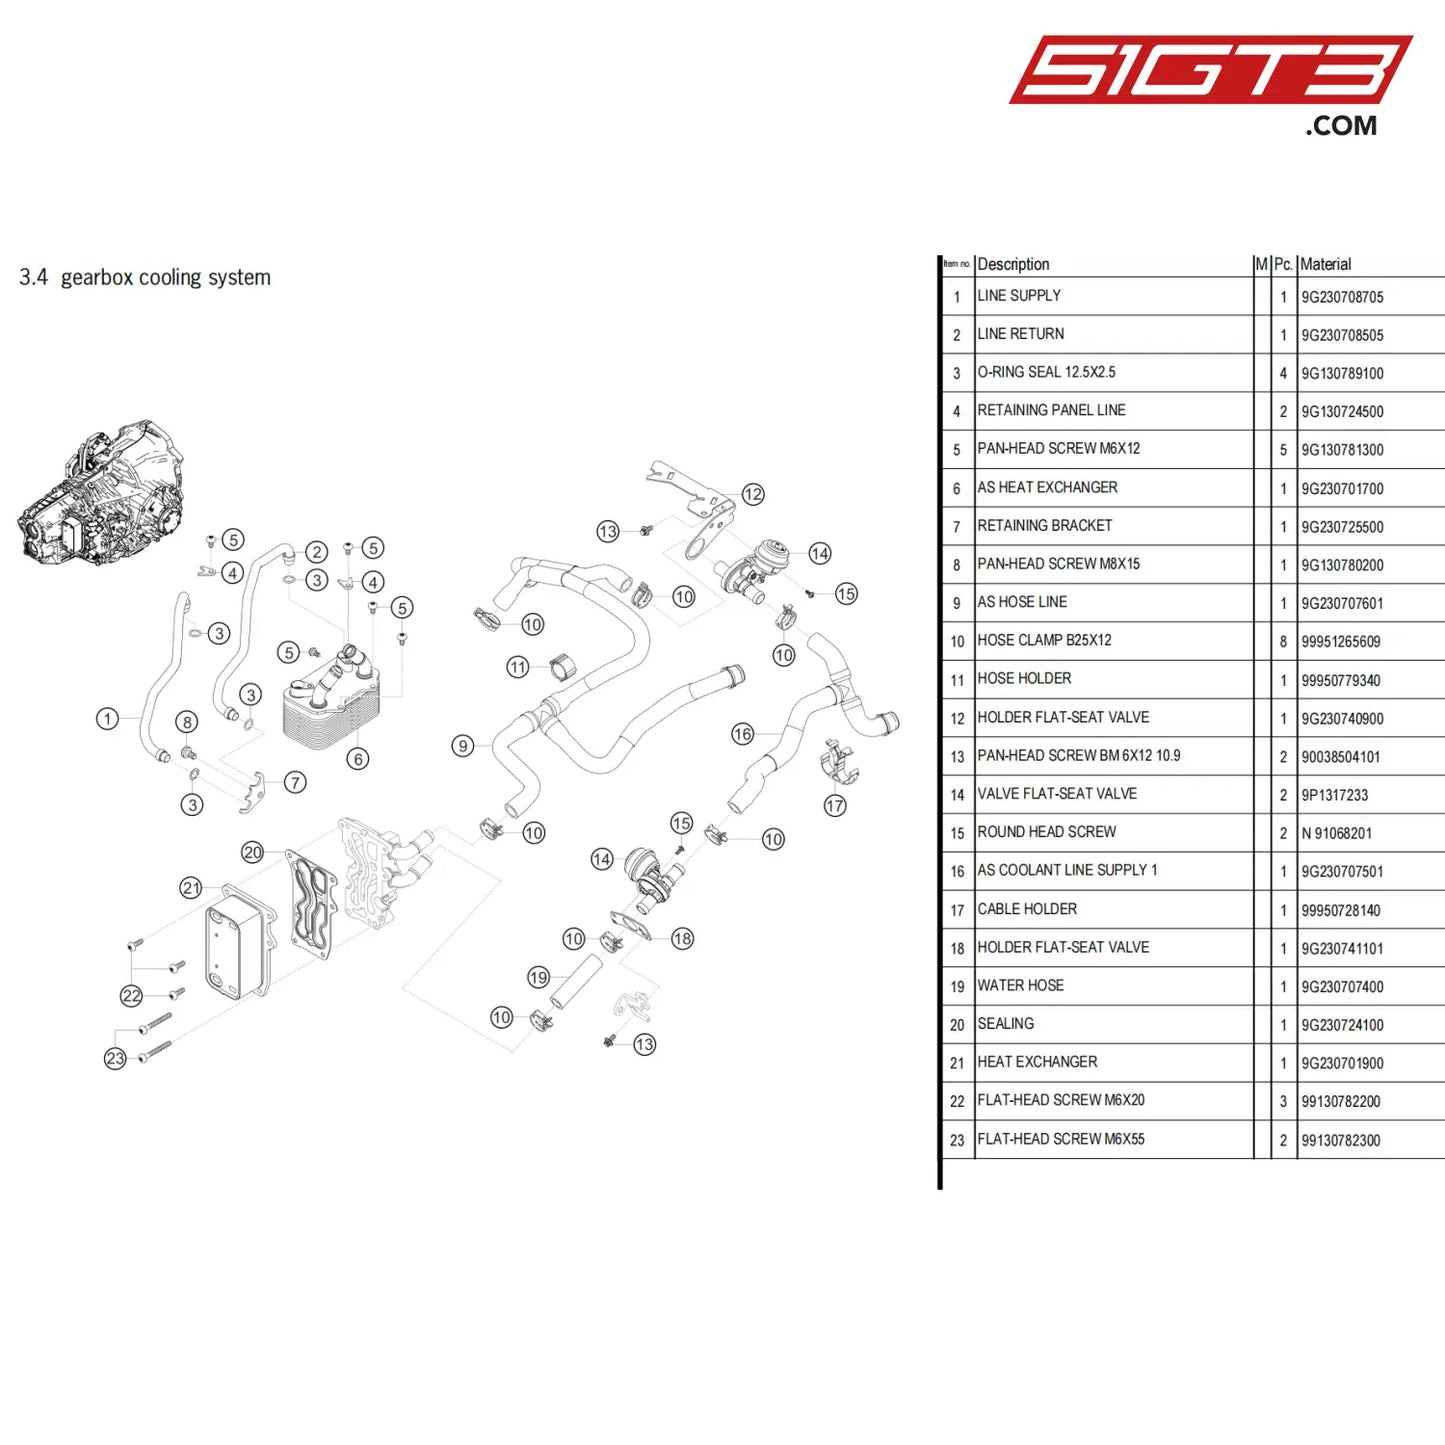 Line Supply - 9G230708705 [Porsche 718 Cayman Gt4 Clubsport] Gearbox Cooling System